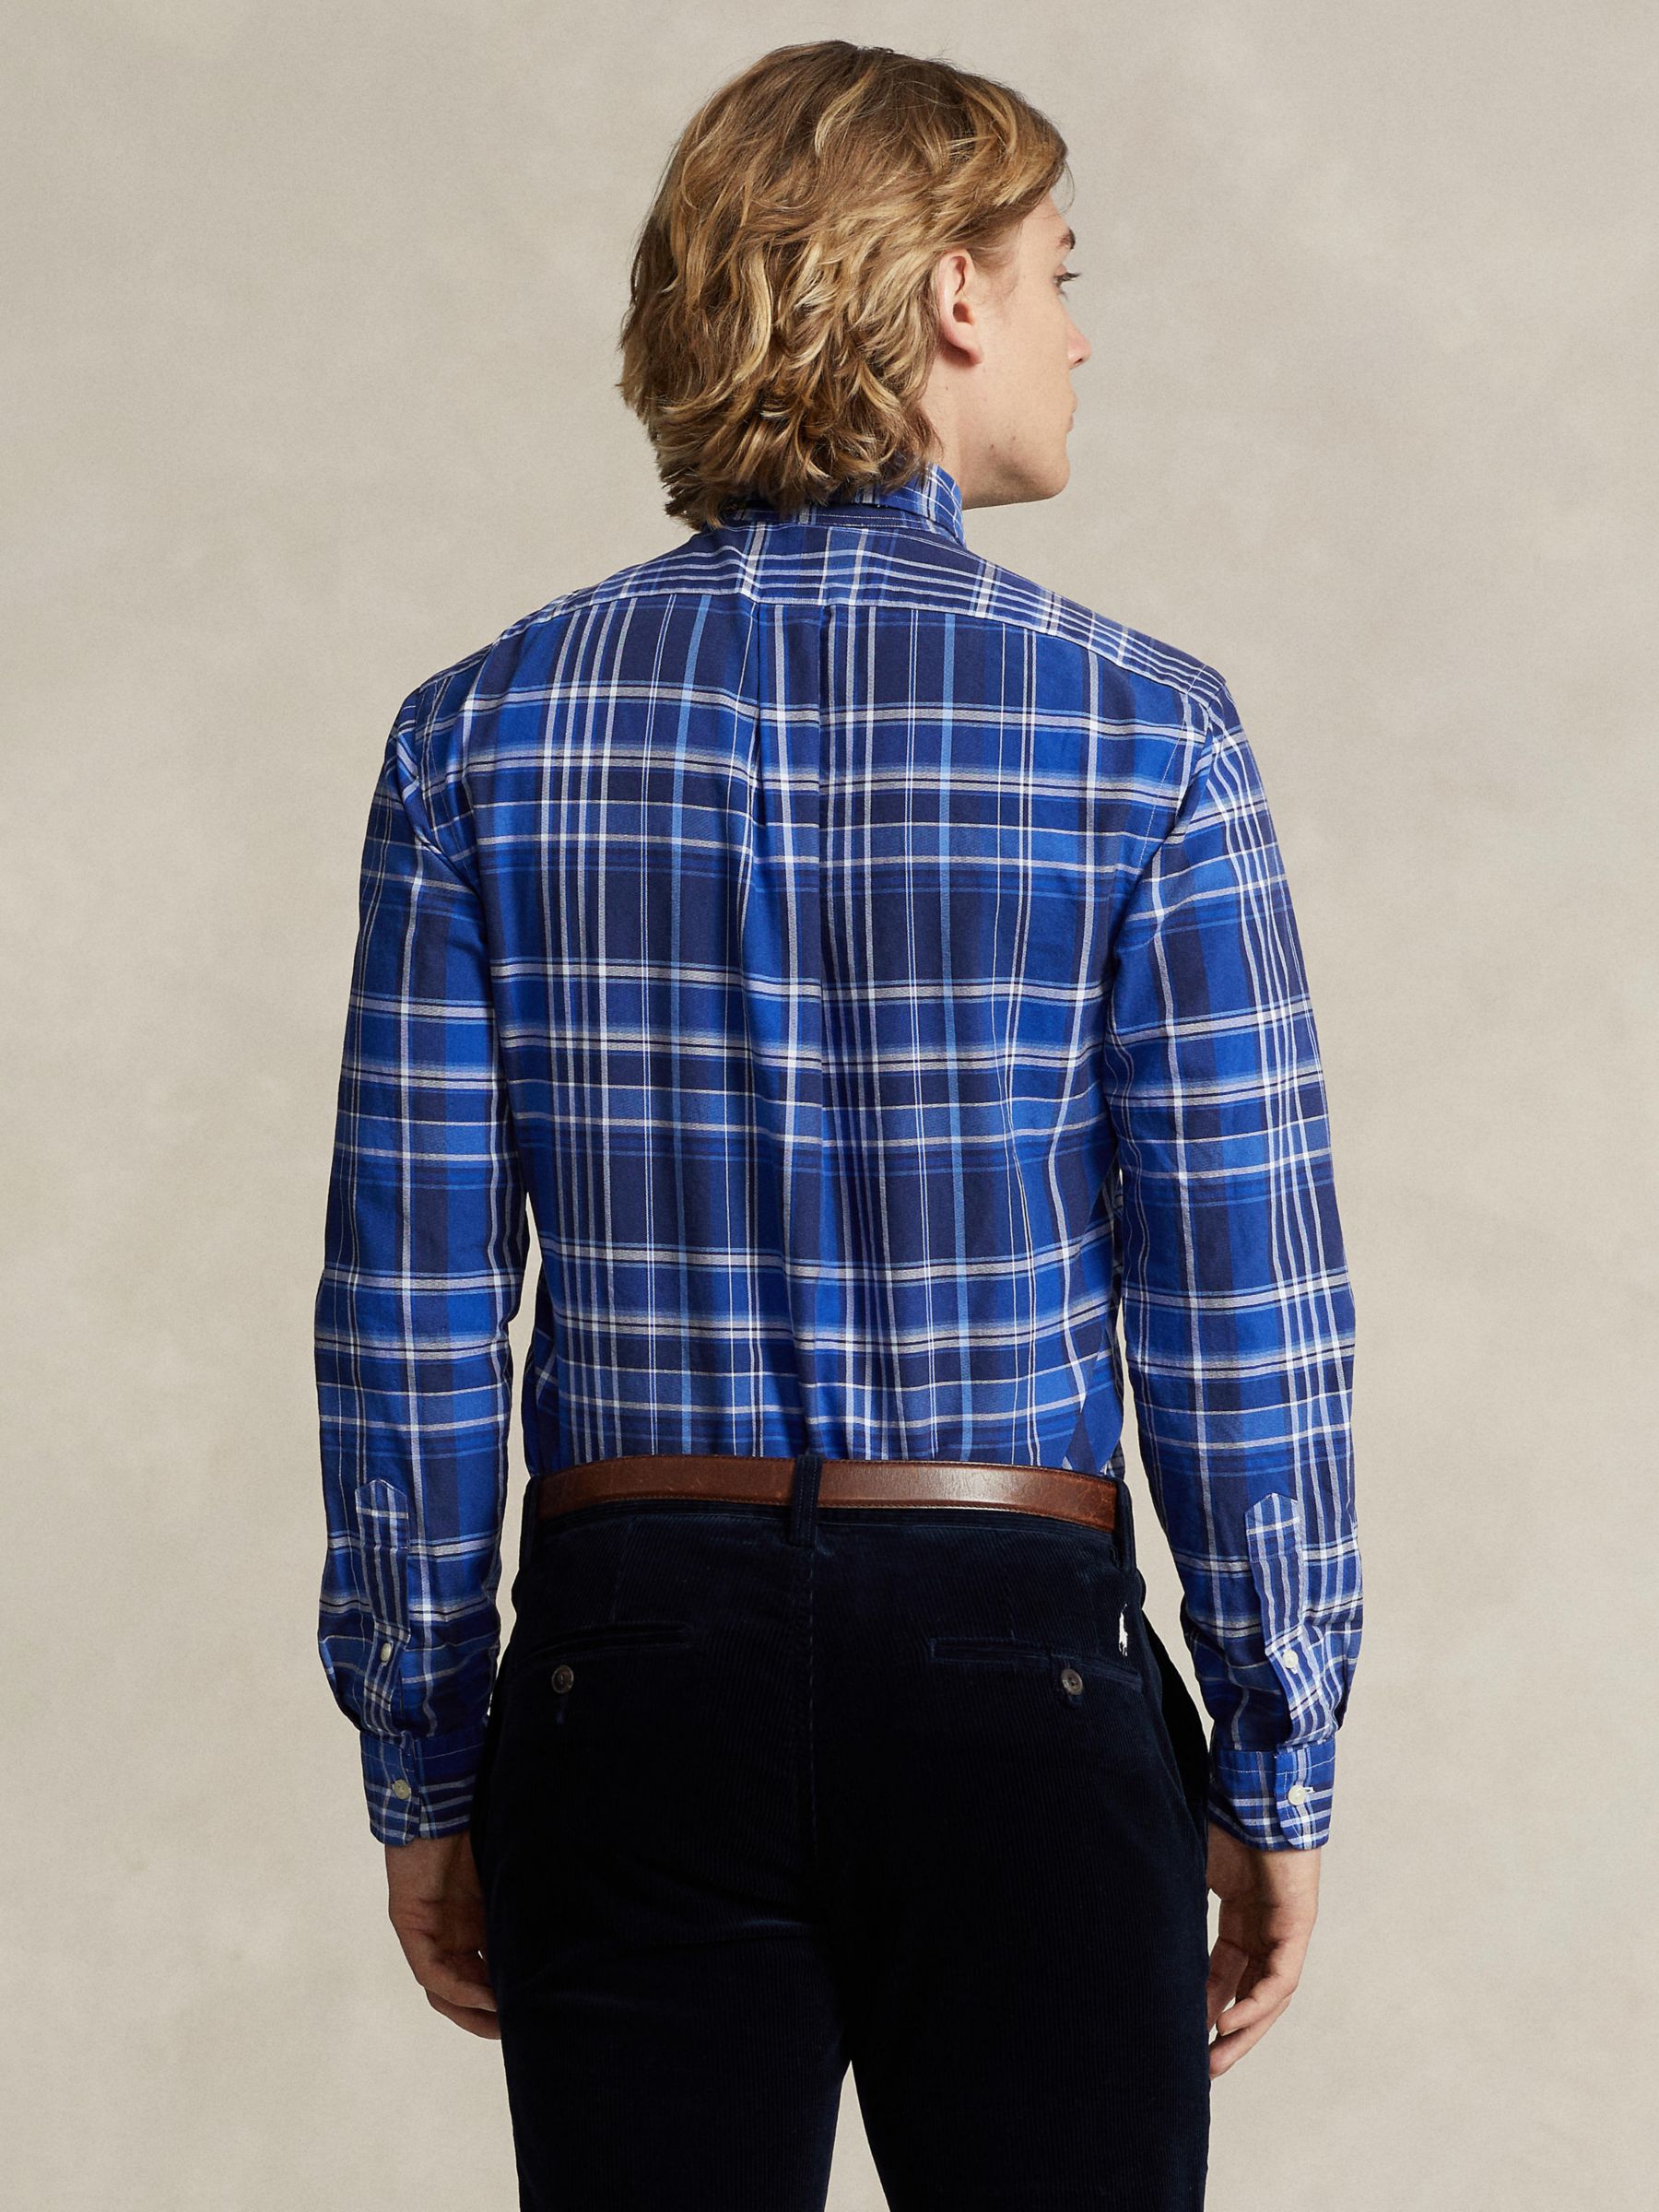 Buy Ralph Lauren Polo Ralph Lauren Check Long Sleeve Cotton Shirt, Blue/Multi Online at johnlewis.com